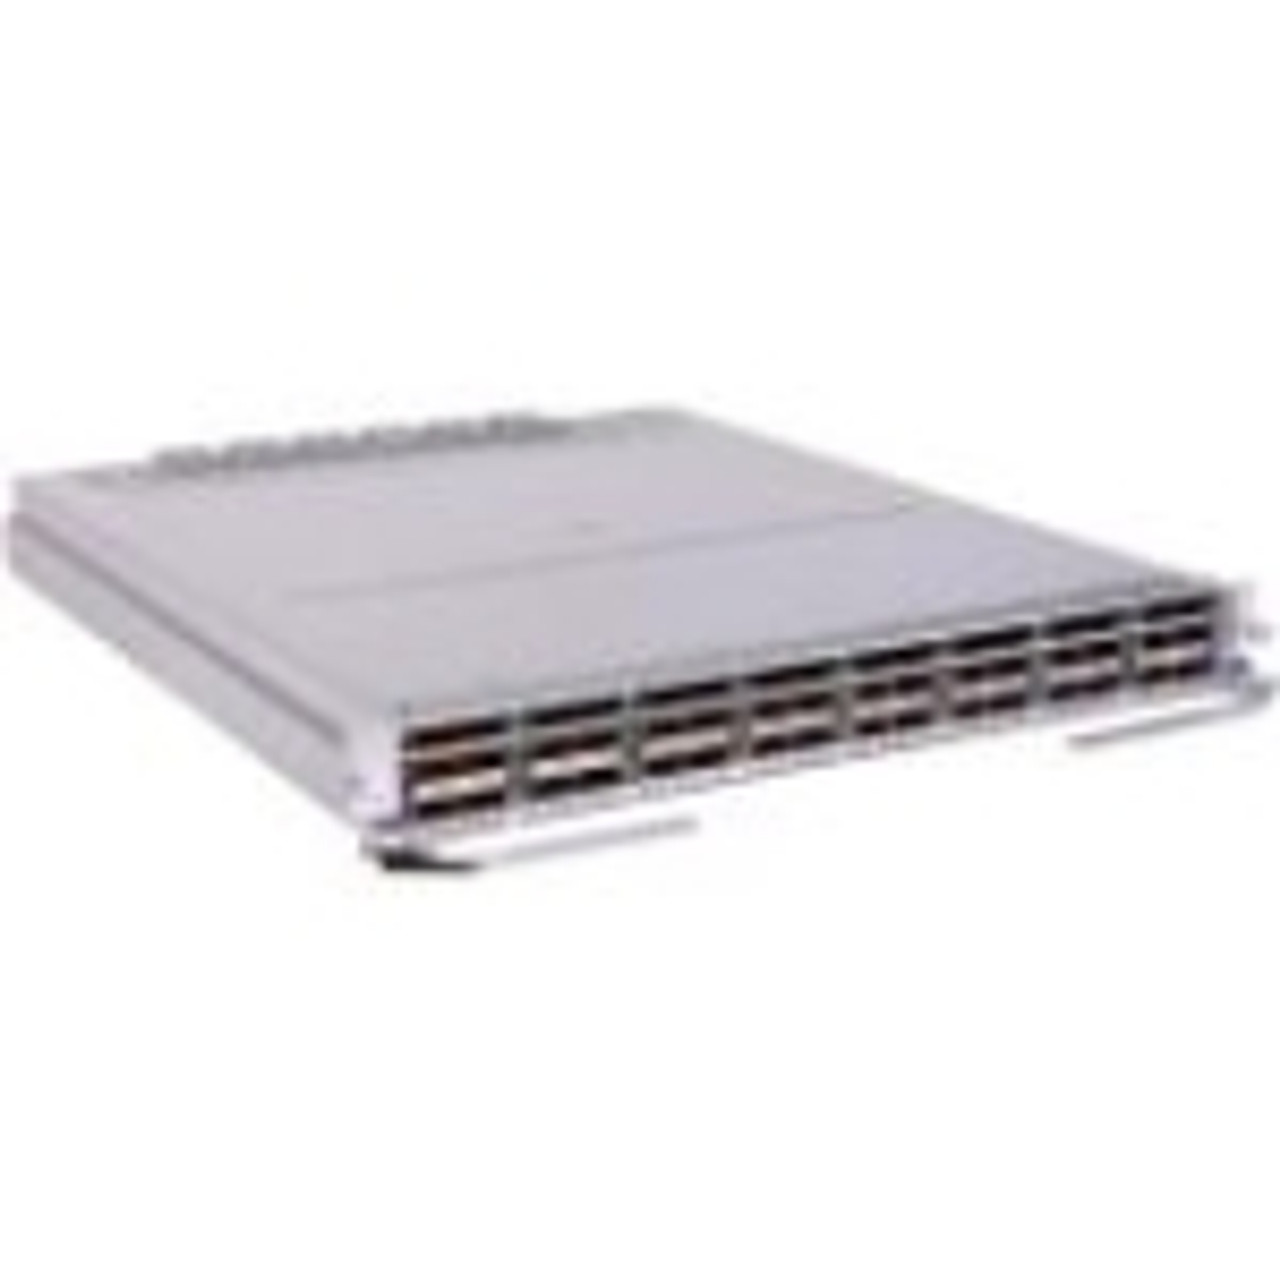 JH359AR HP FlexFabric 12900E 48-port 40GbE QSFP+ HB Module For Data Networking, Optical NetworkOptical Fiber40 Gigabit Ethernet 40GBase-X48 x Expansion